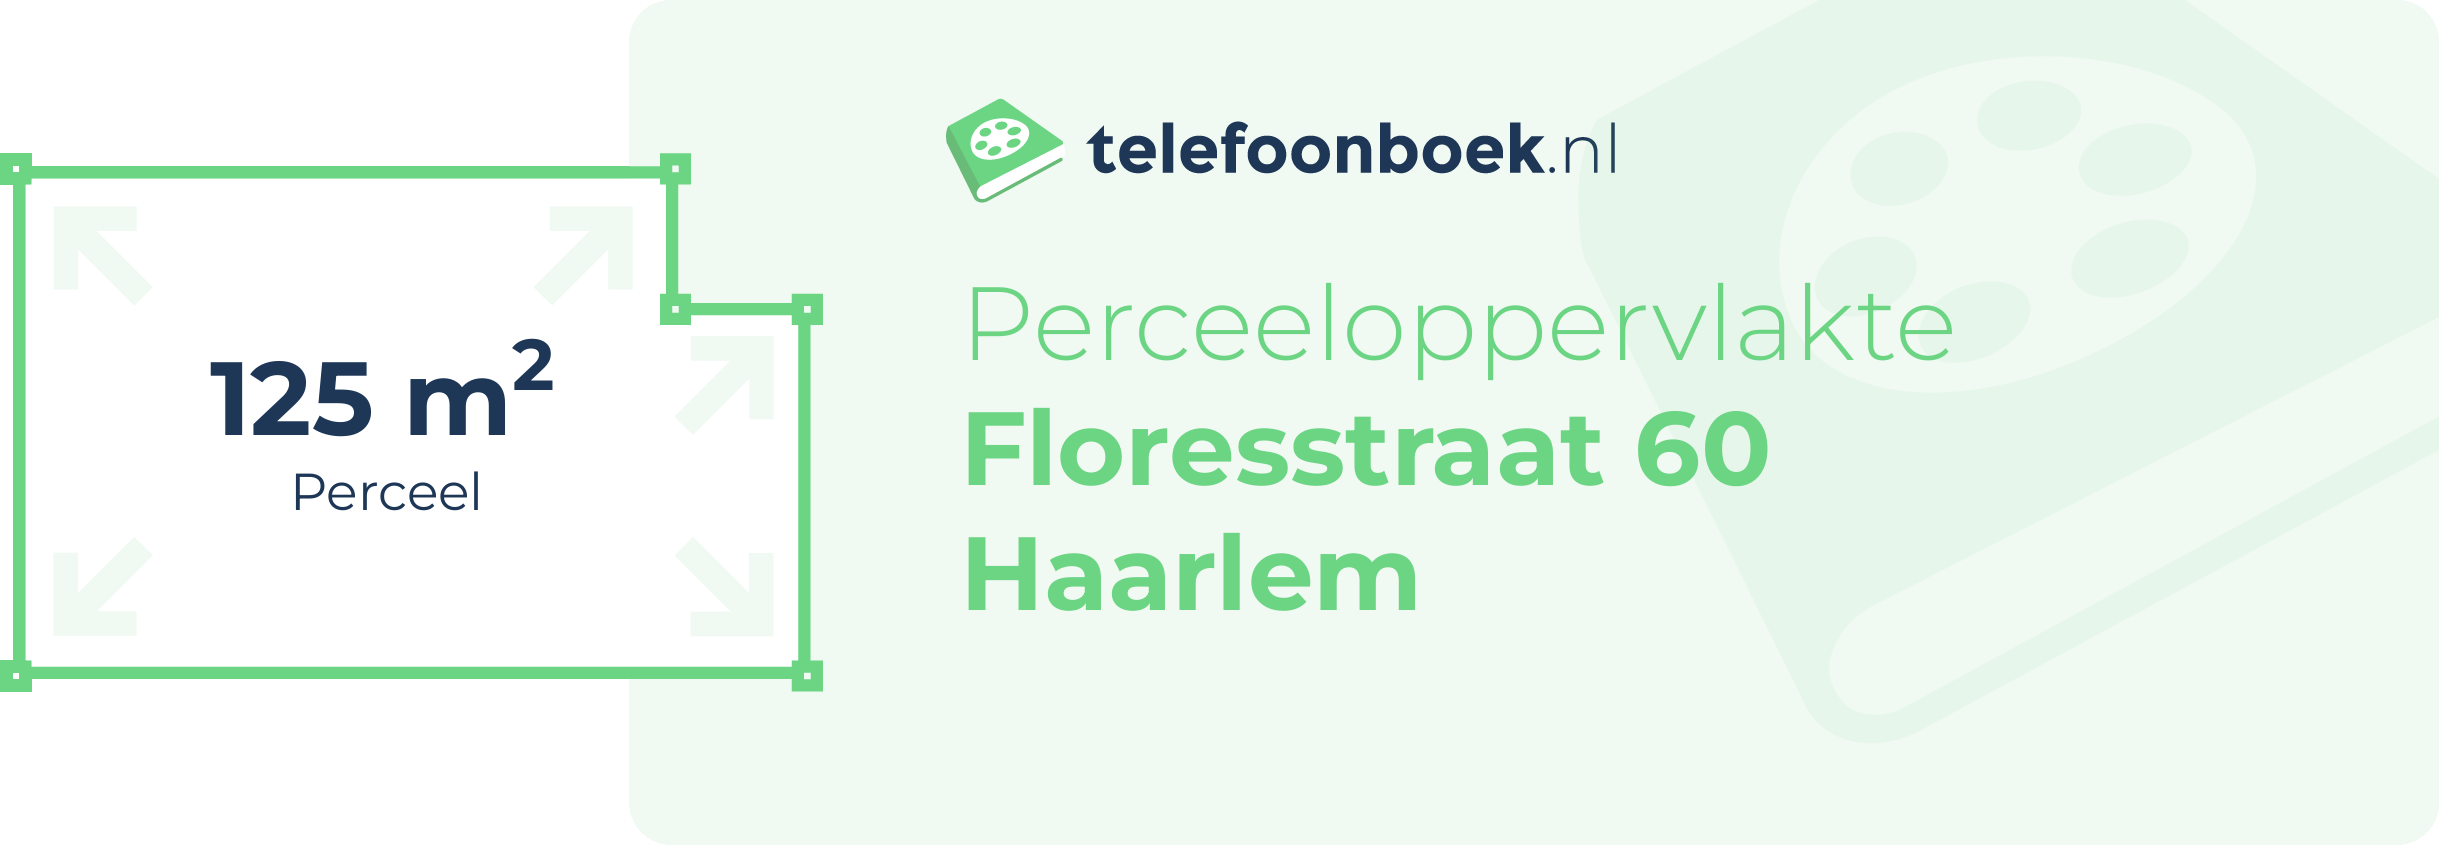 Perceeloppervlakte Floresstraat 60 Haarlem